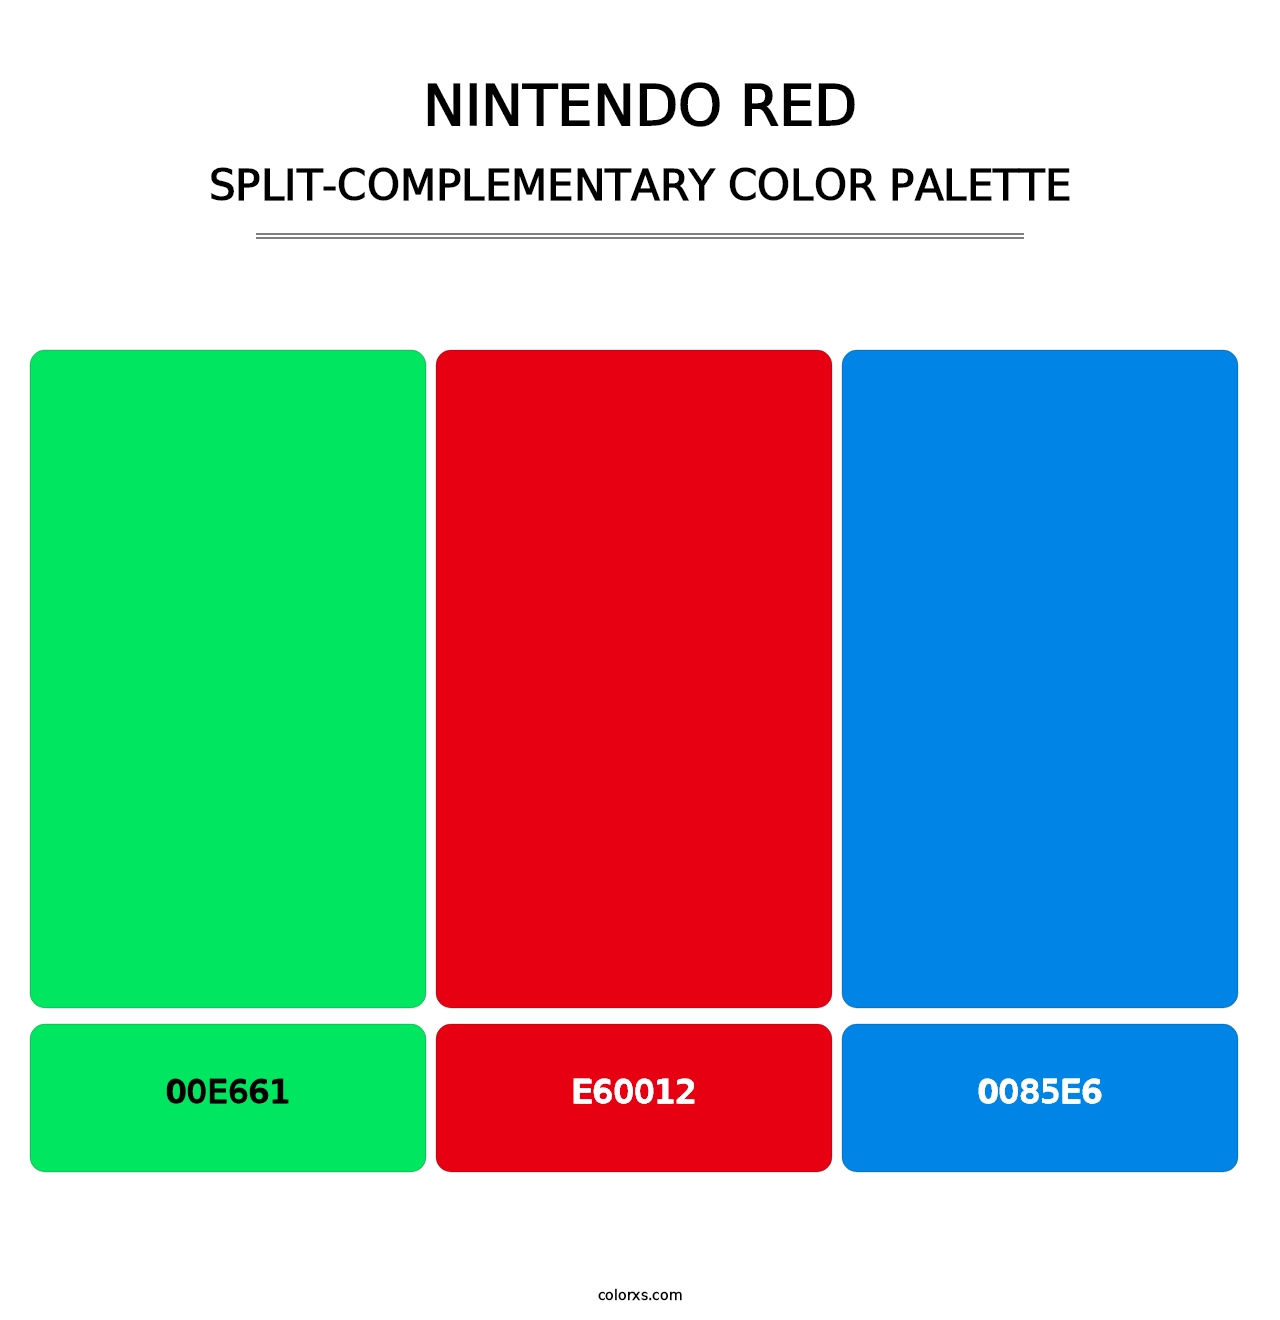 Nintendo Red - Split-Complementary Color Palette